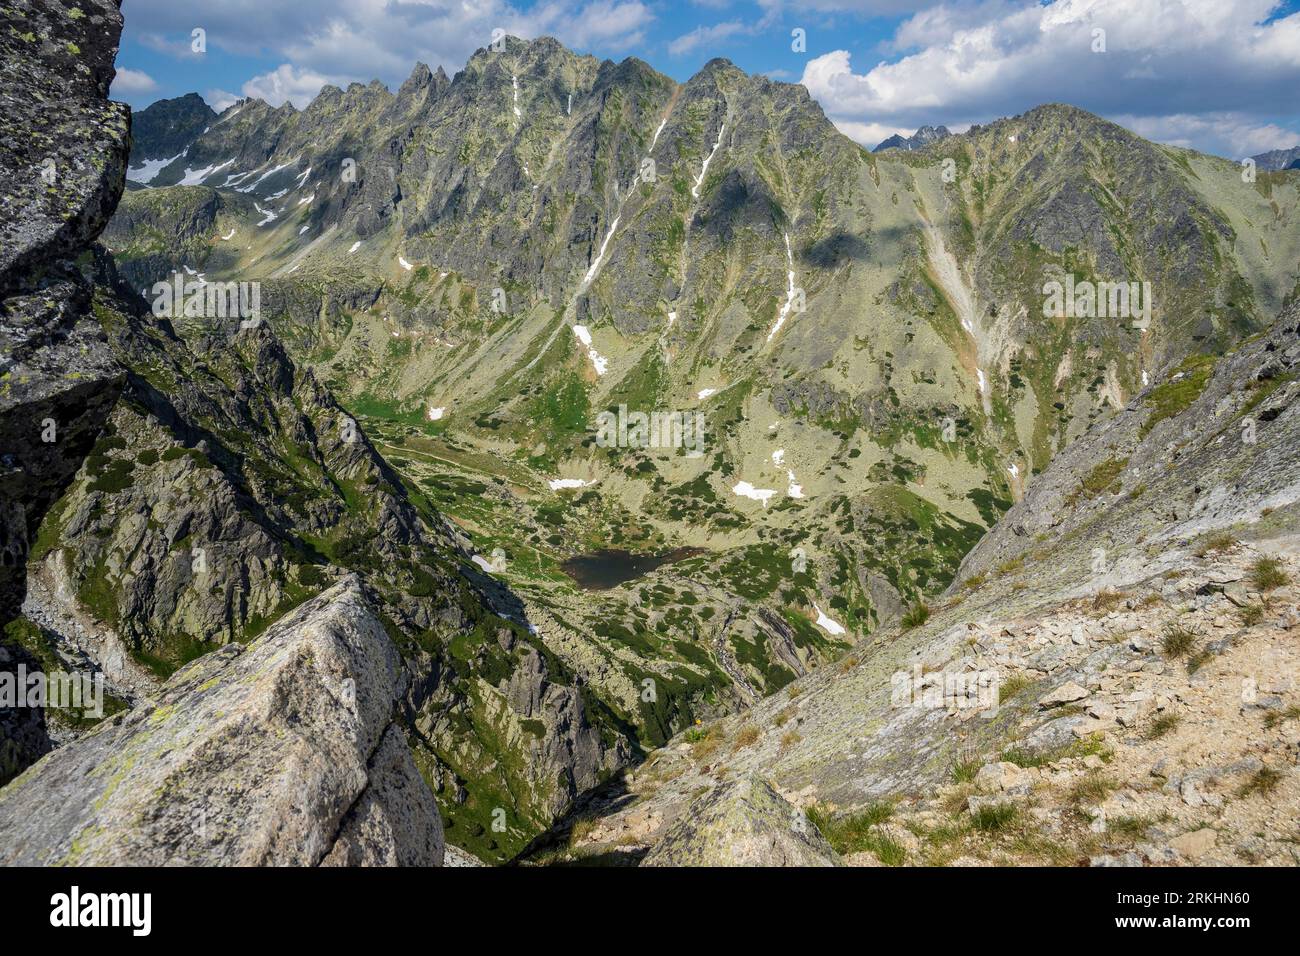 Mlynicka dolina - vue depuis le sommet de Predne Solisko. Slovaquie. Banque D'Images